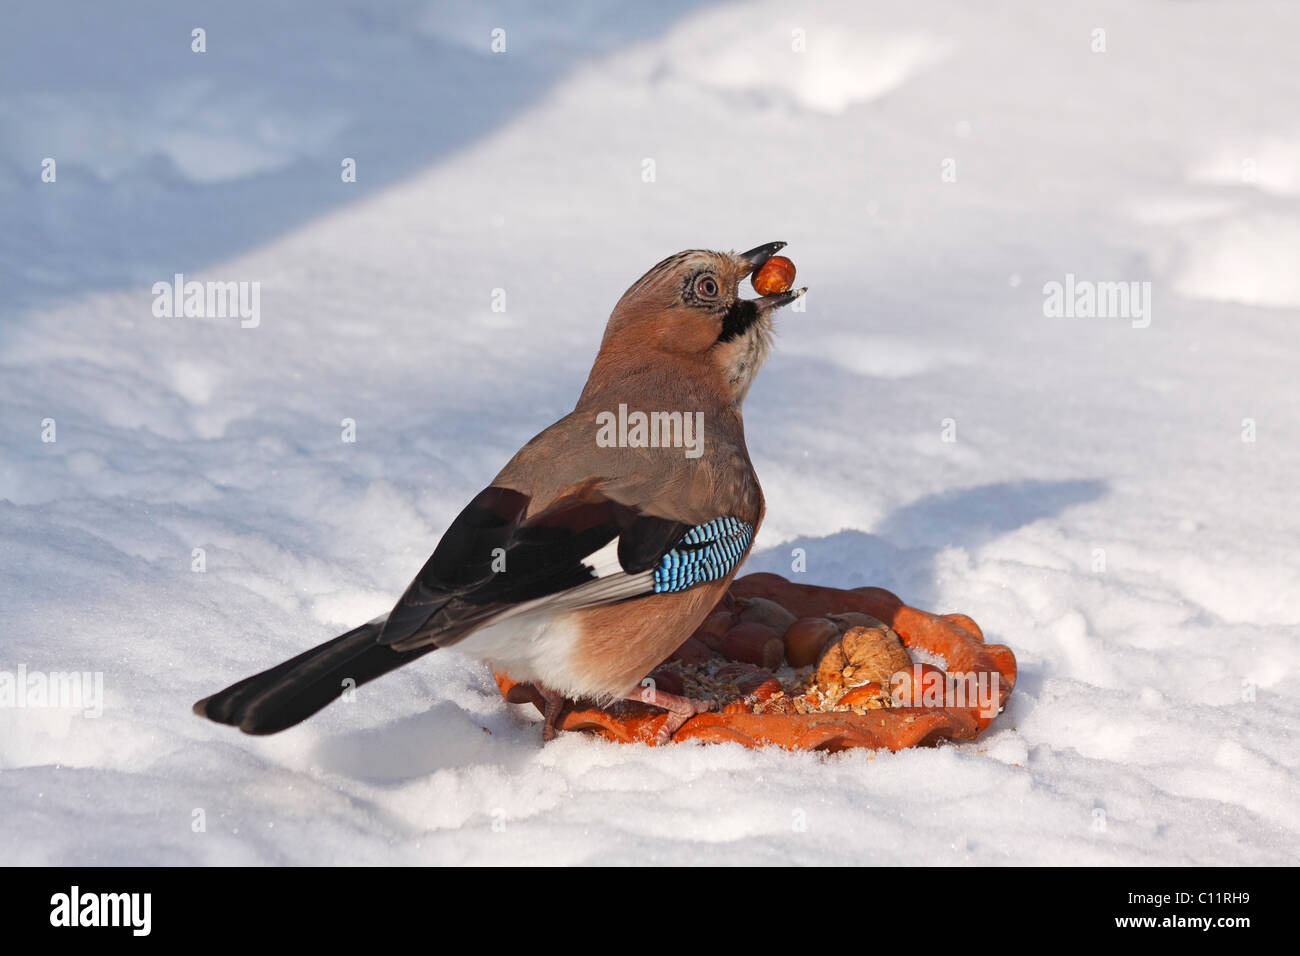 Jay (Garrulus glandarius) with a hazelnut in its beak from a bird feeding site in winter in the snow Stock Photo